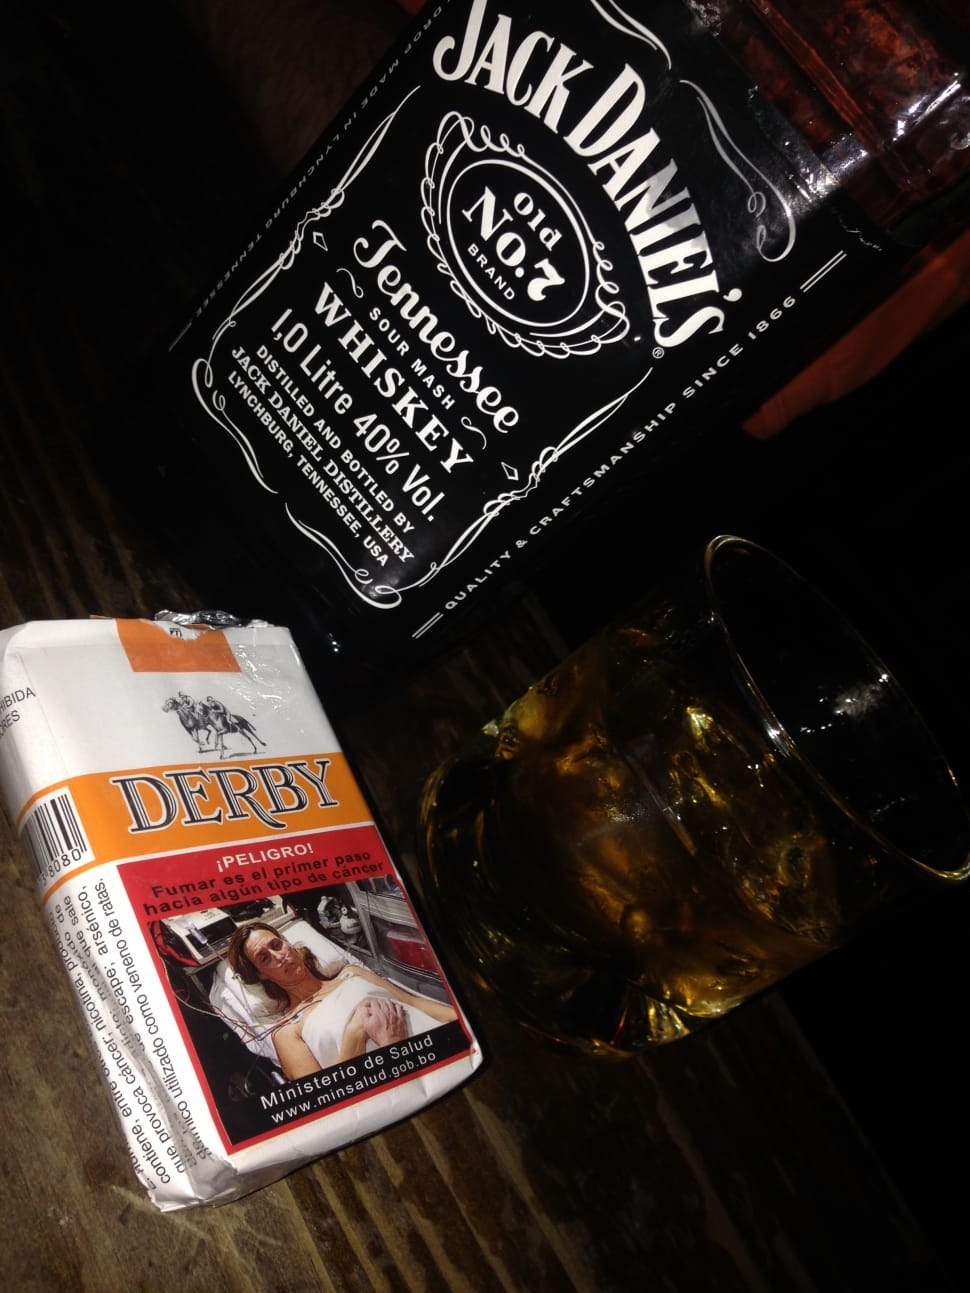 jack daniel's whiskey preview